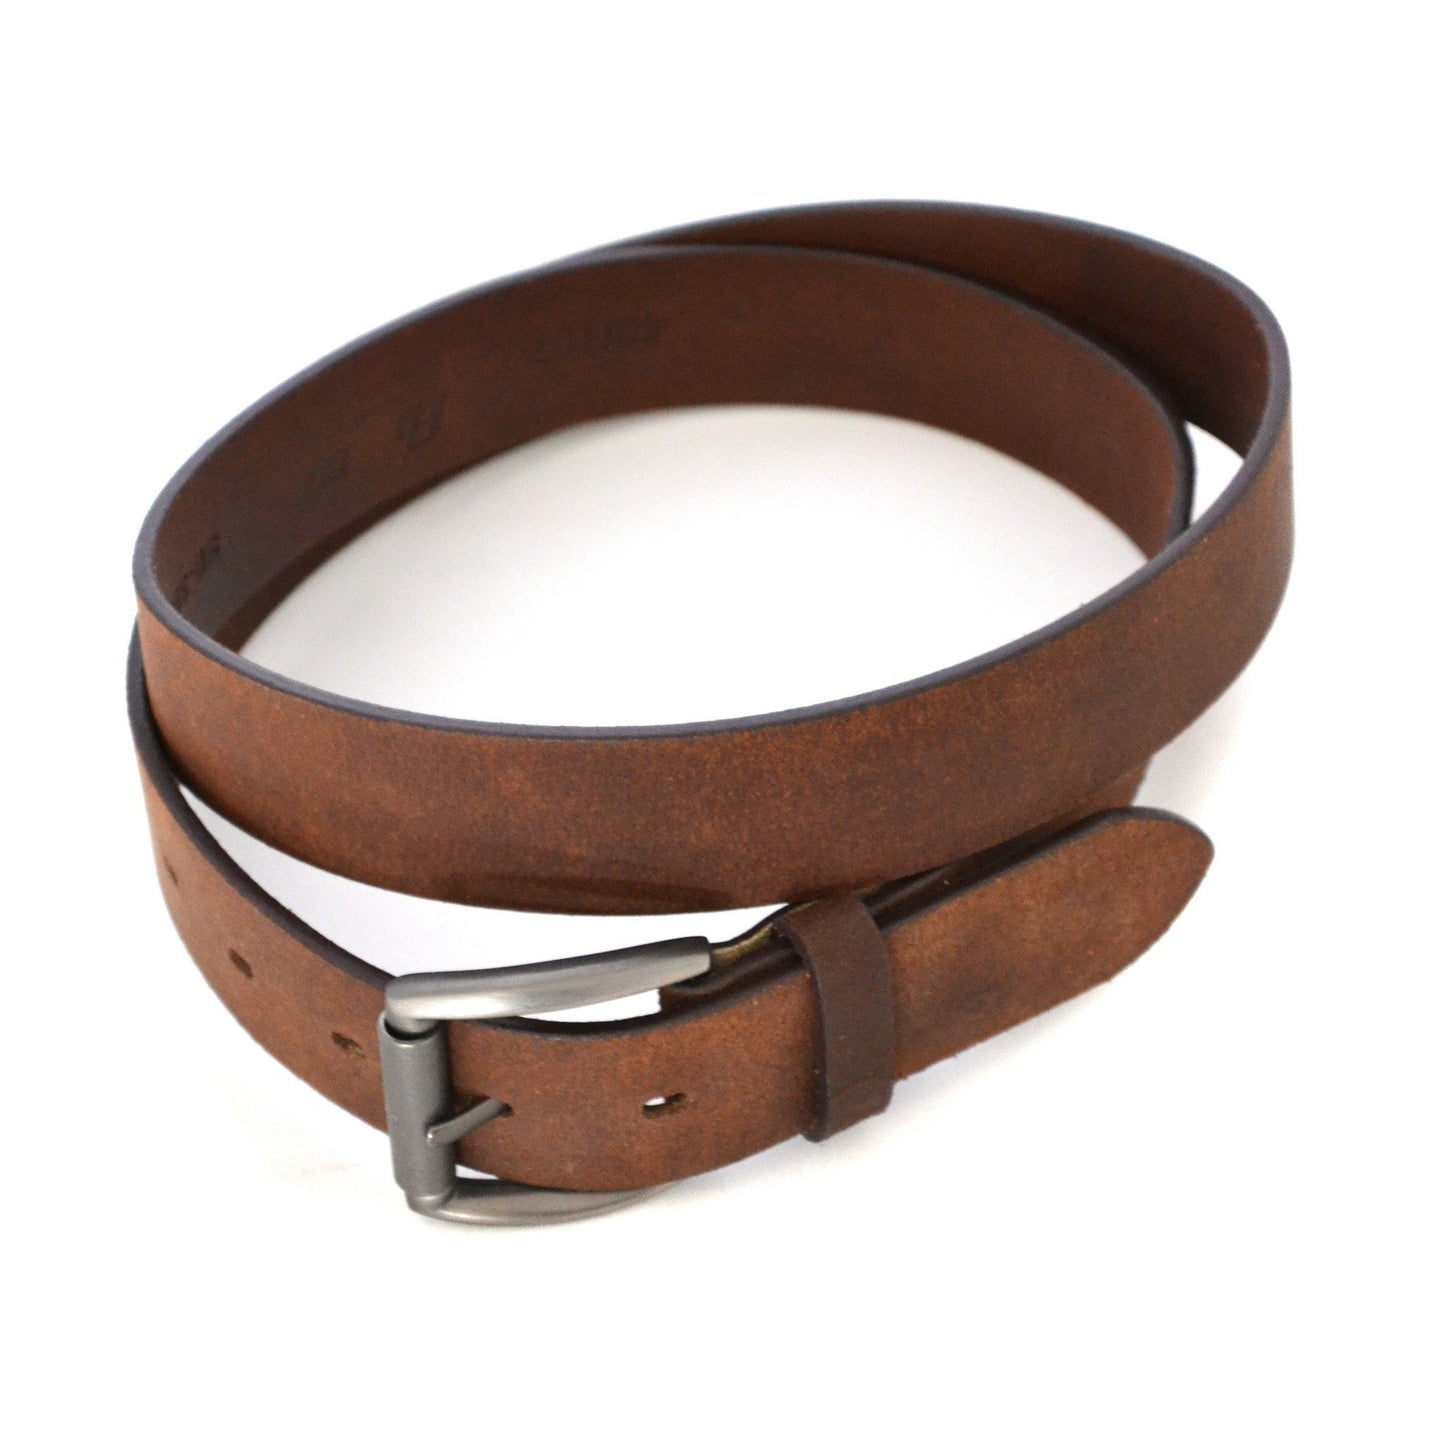 BERNADO - Mens Brown Genuine Leather Belt – The Fitting Belt Company